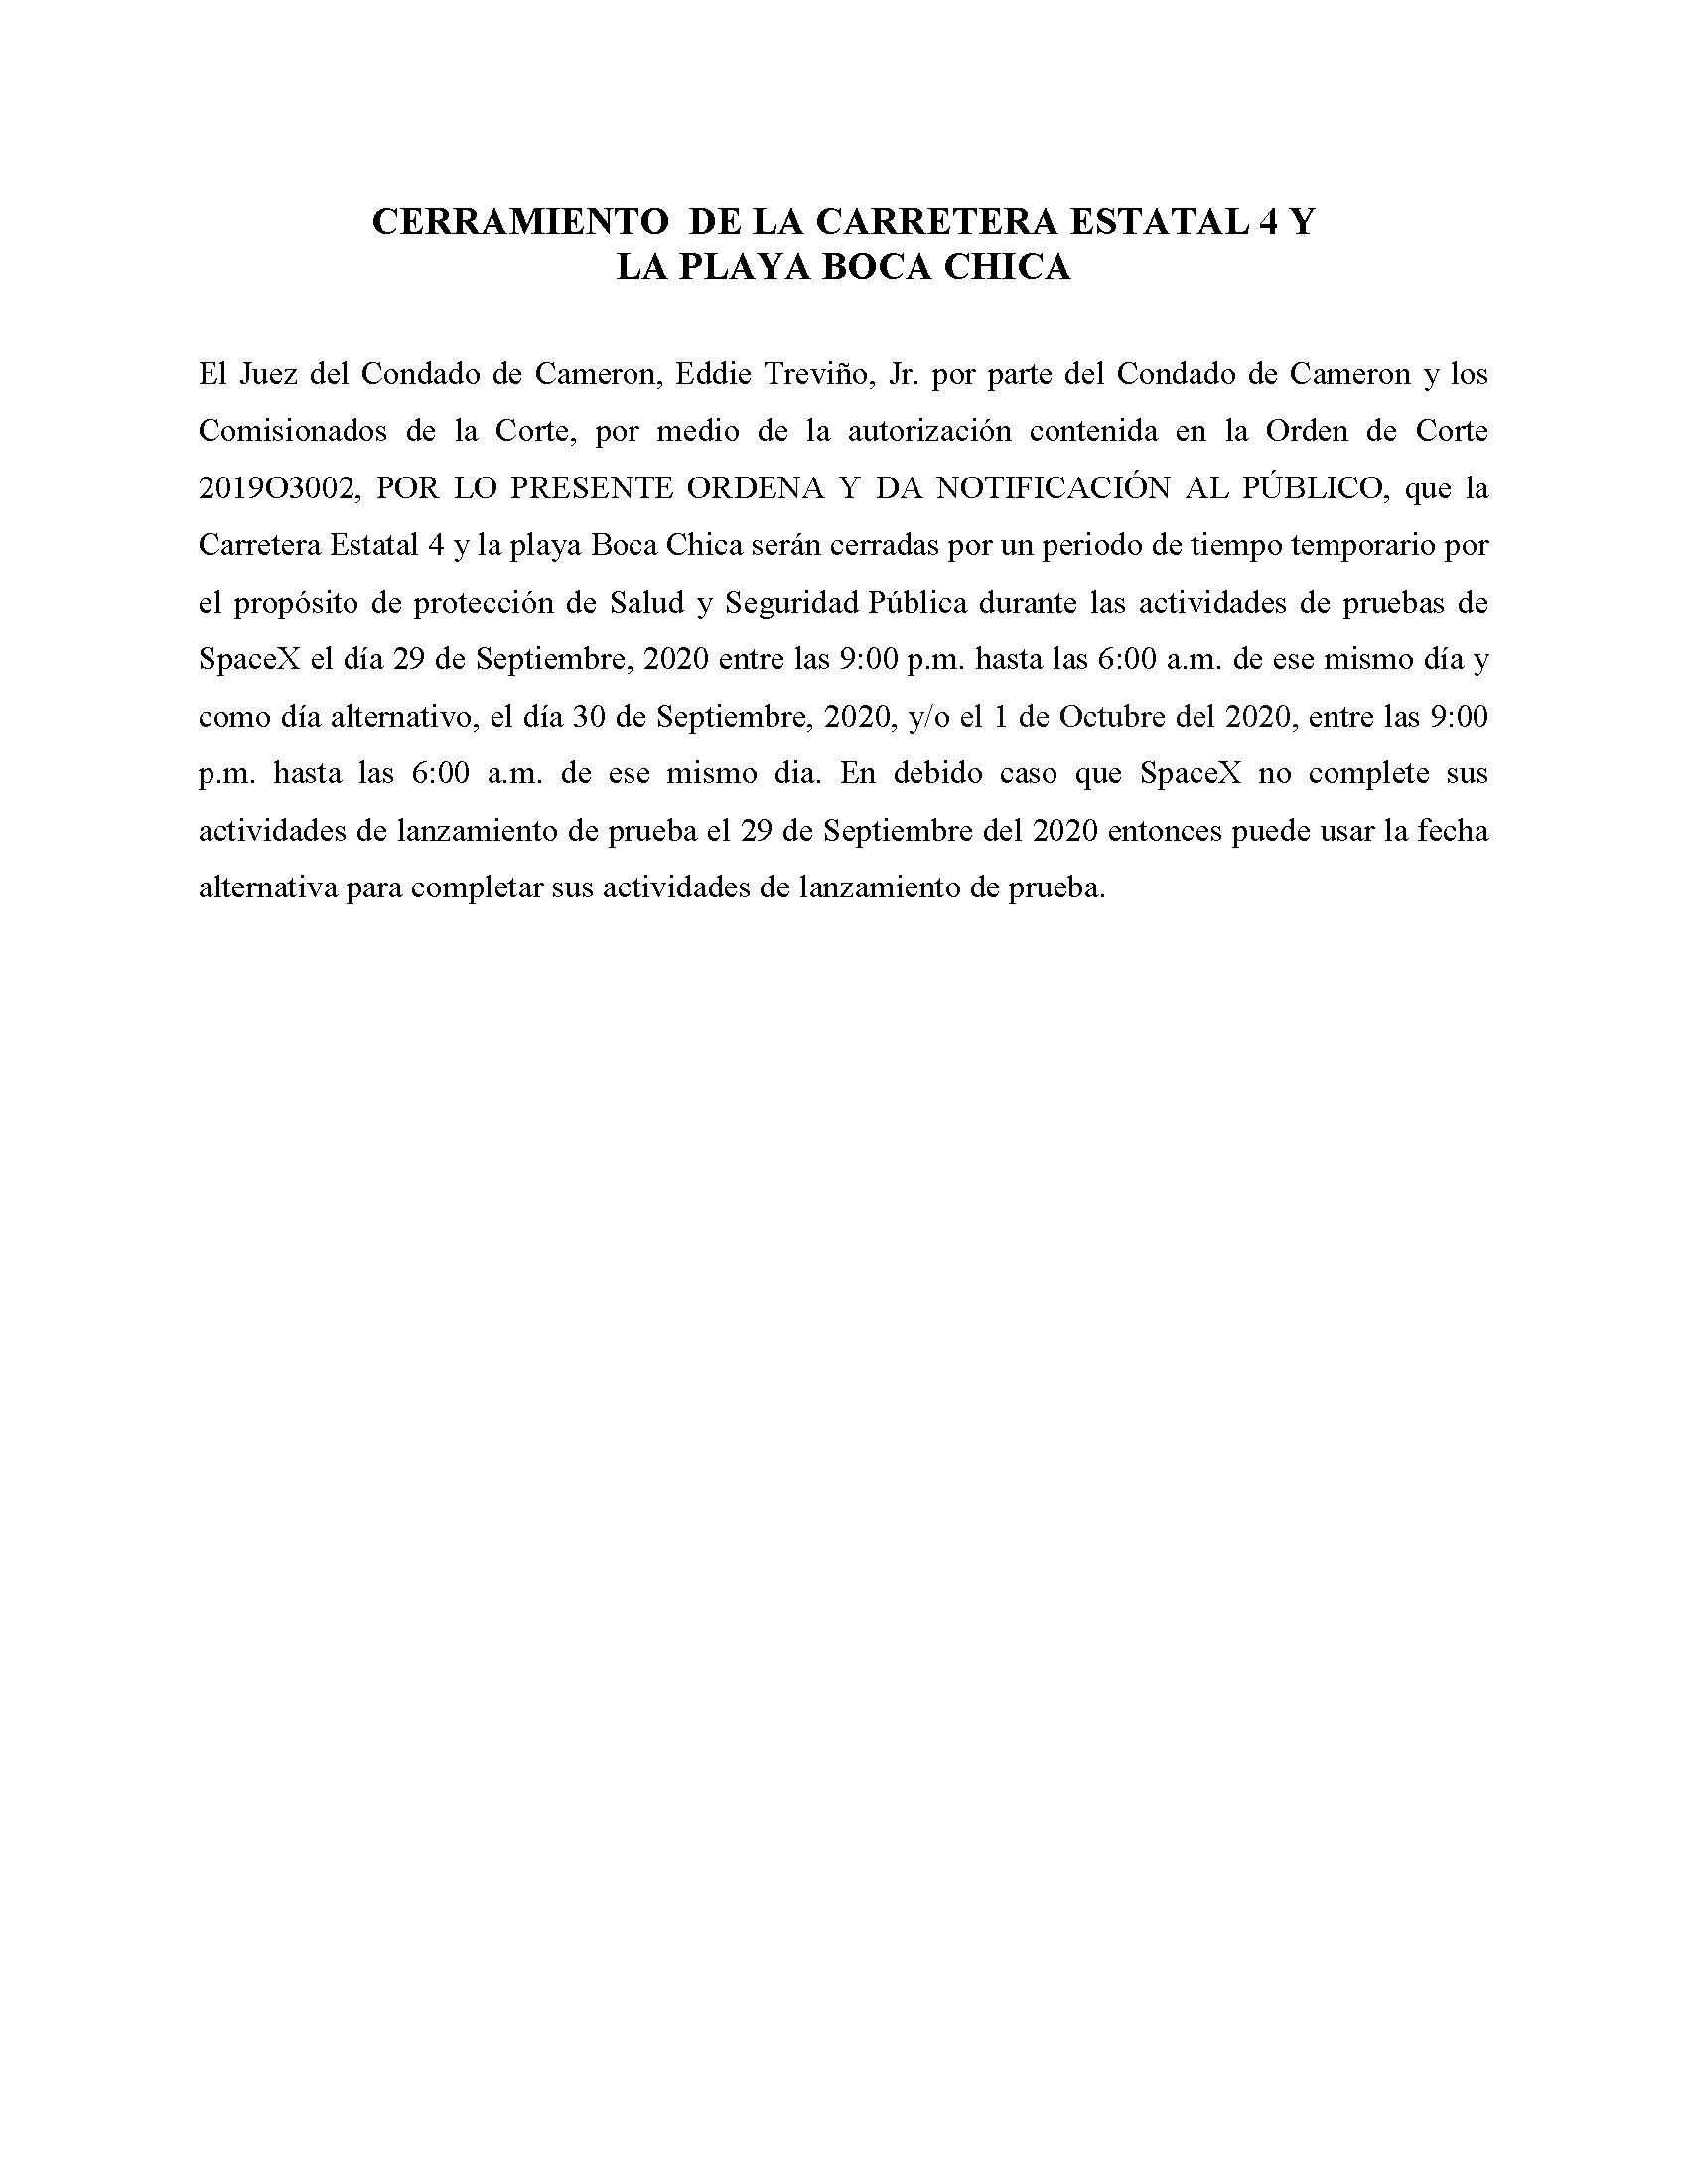 ORDER.CLOSURE OF HIGHWAY 4 Y LA PLAYA BOCA CHICA.SPANISH.09.29.20